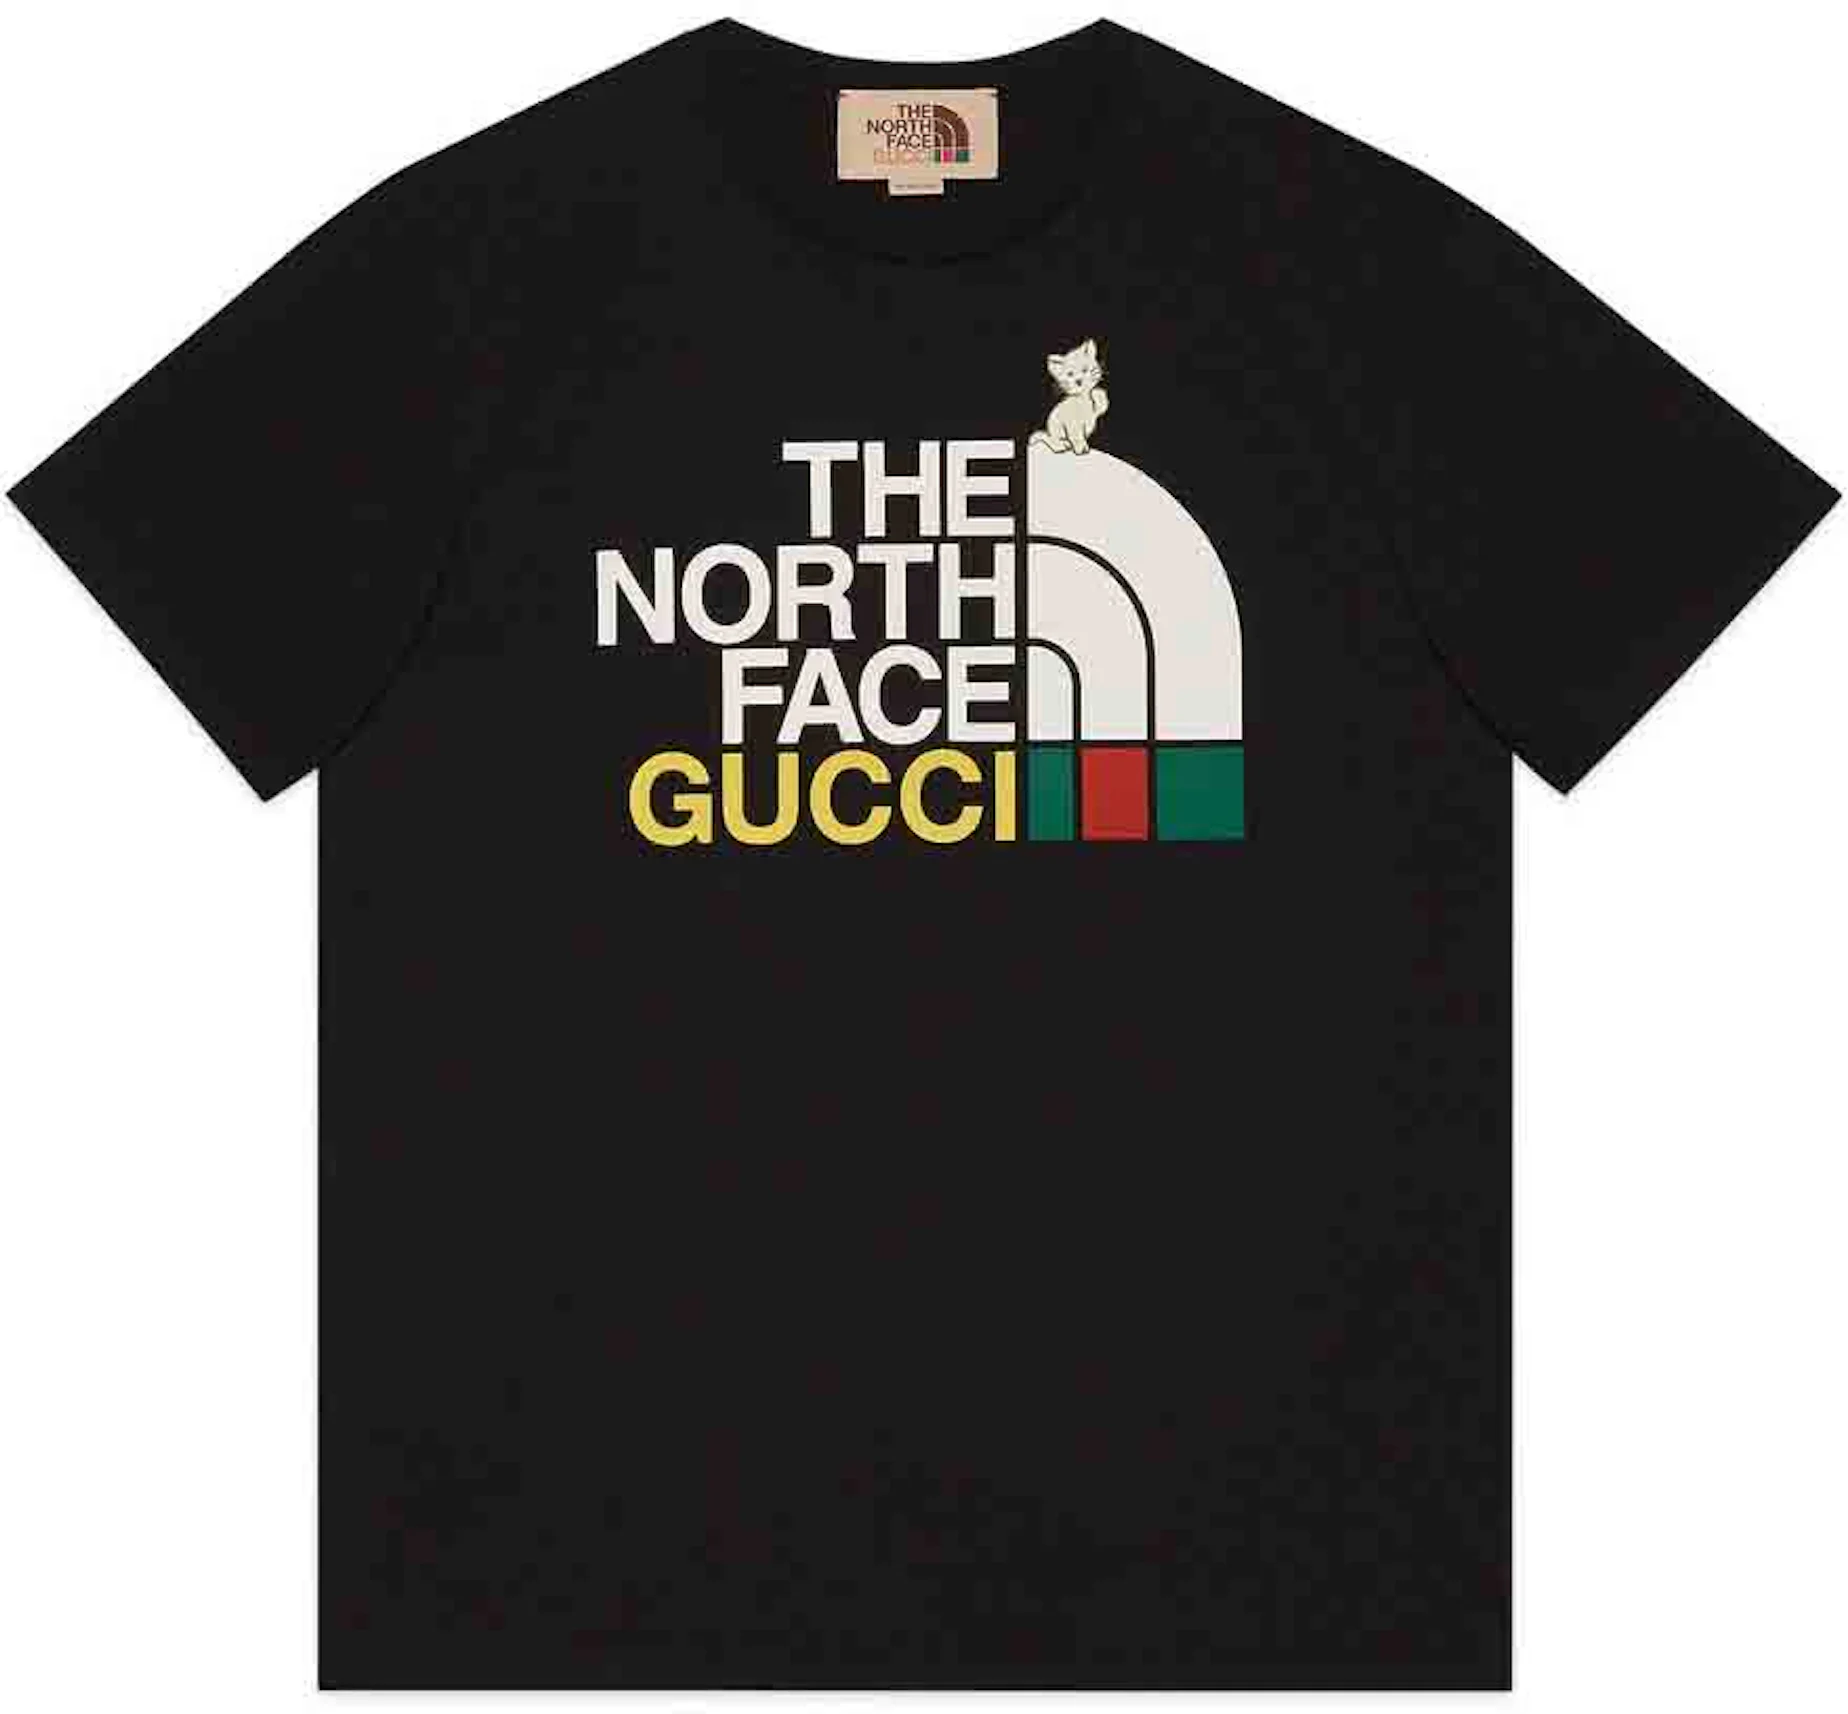 https://images.stockx.com/images/Gucci-x-The-North-Face-T-shirt-Black.jpg?fit=fill&bg=FFFFFF&w=1200&h=857&fm=webp&auto=compress&dpr=2&trim=color&updated_at=1638835120&q=60